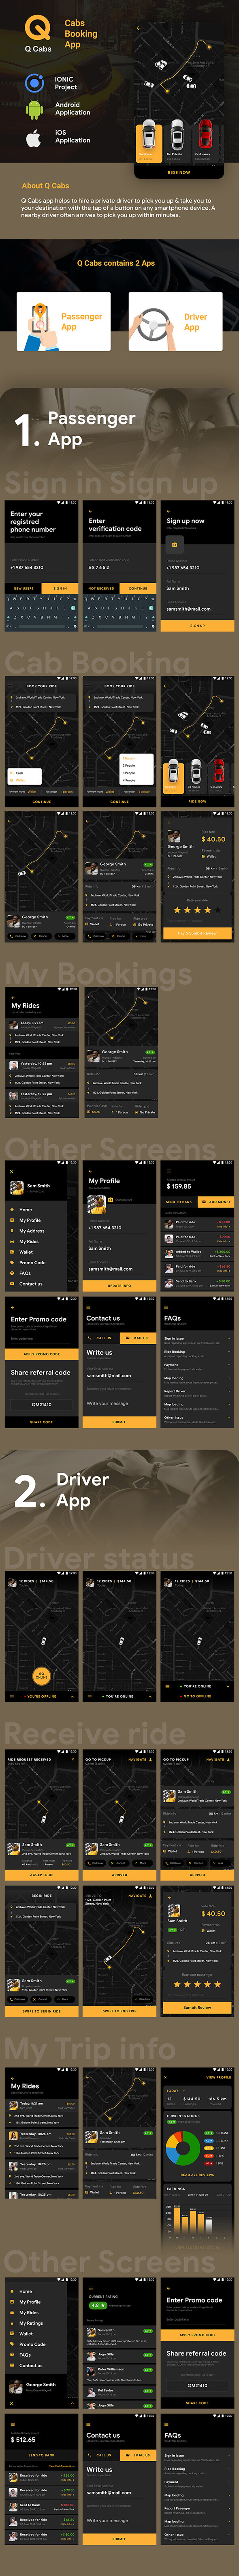 Taksi Rezervasyonu Android + iOS Uygulama Şablonu | 2 Uygulama Sürücü + Sürücü | Taksi Uygulaması Qcabs | HTML + CSS İYONİK 3 - 2